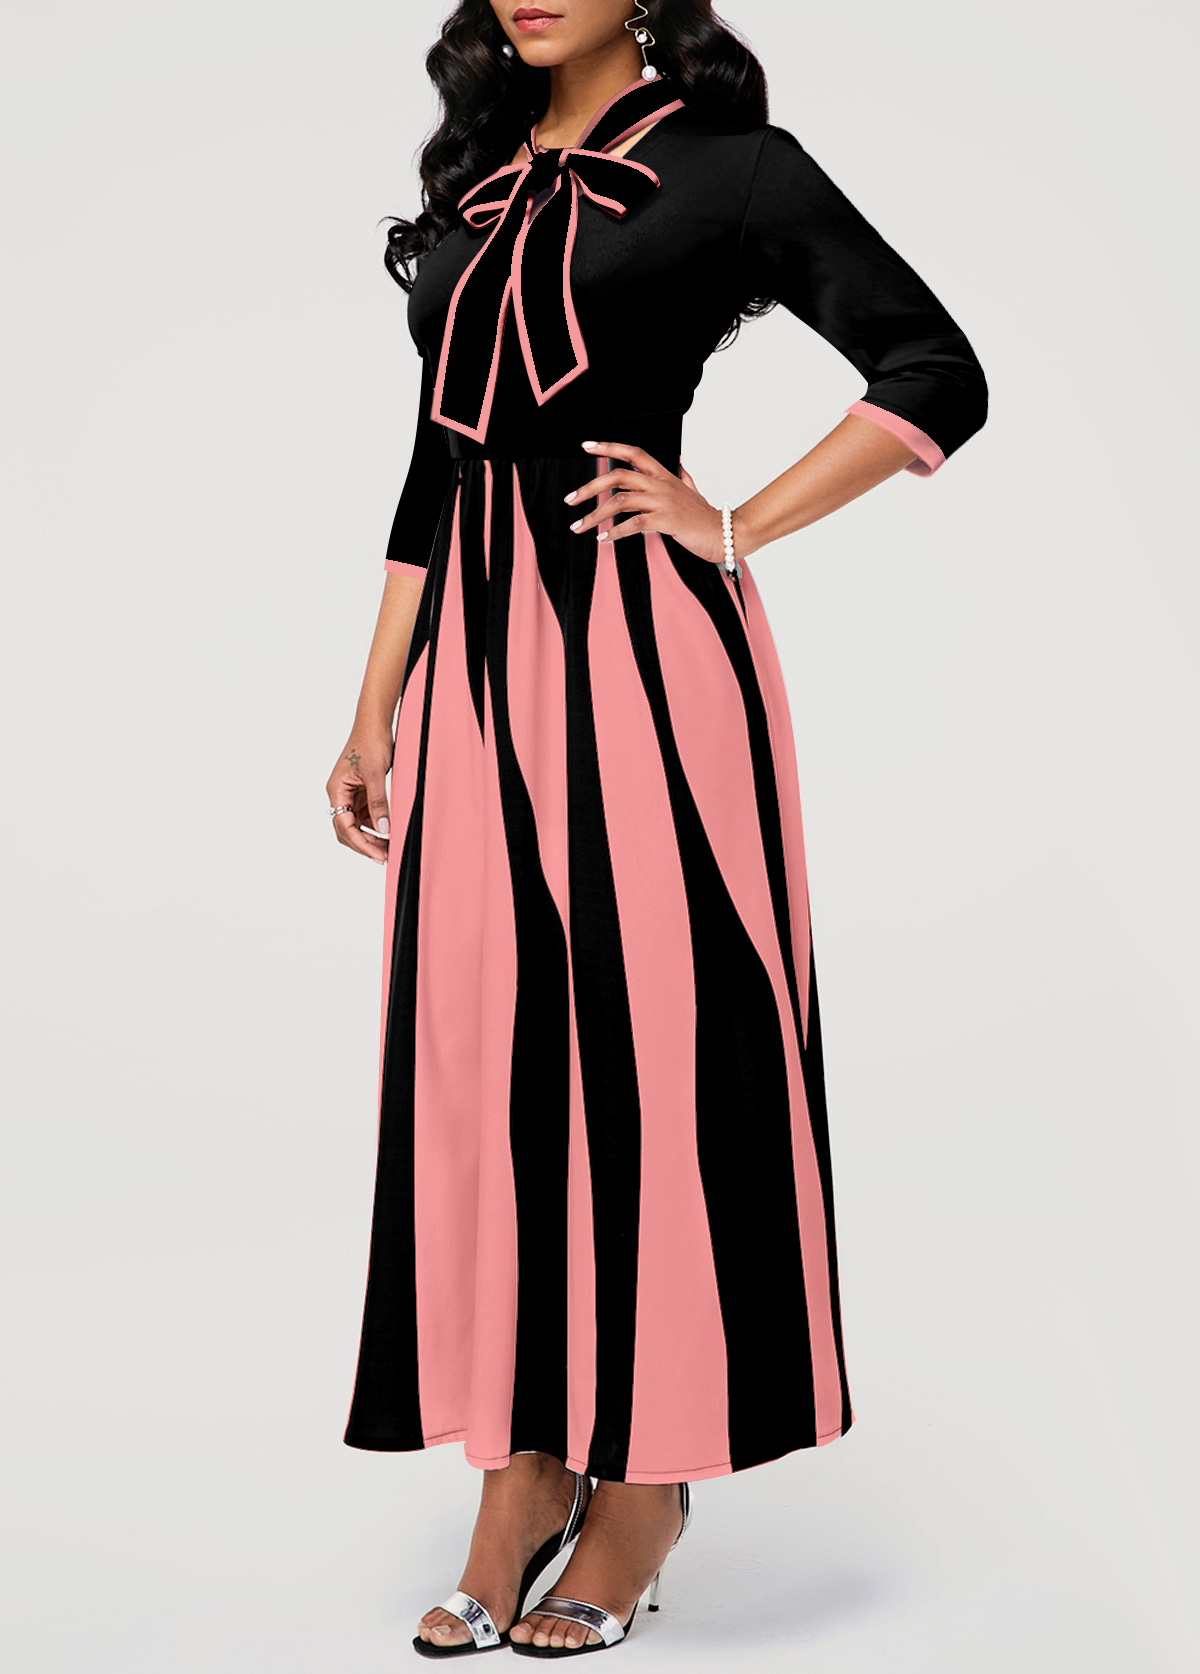 Geometric Print 3/4 Sleeve Pink Pocket Dress